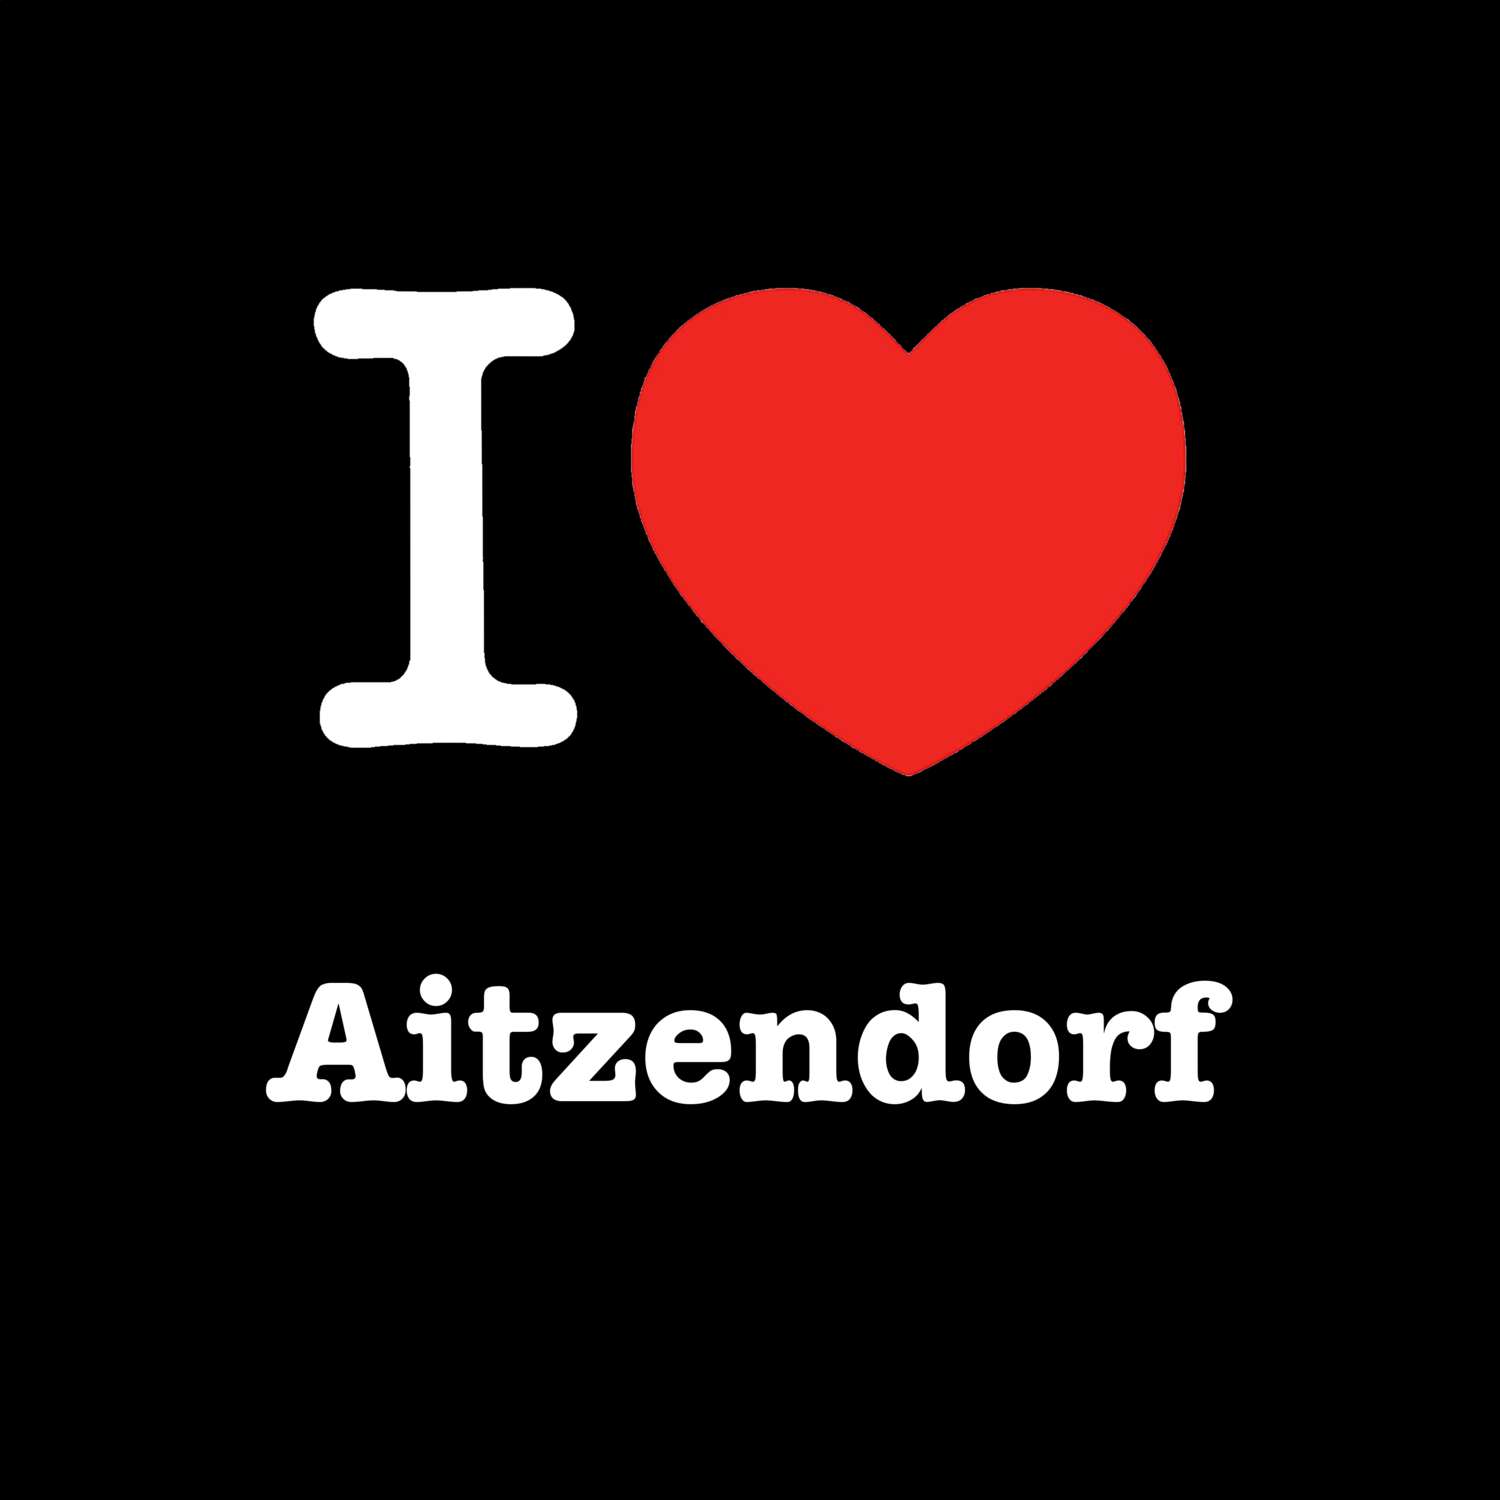 Aitzendorf T-Shirt »I love«